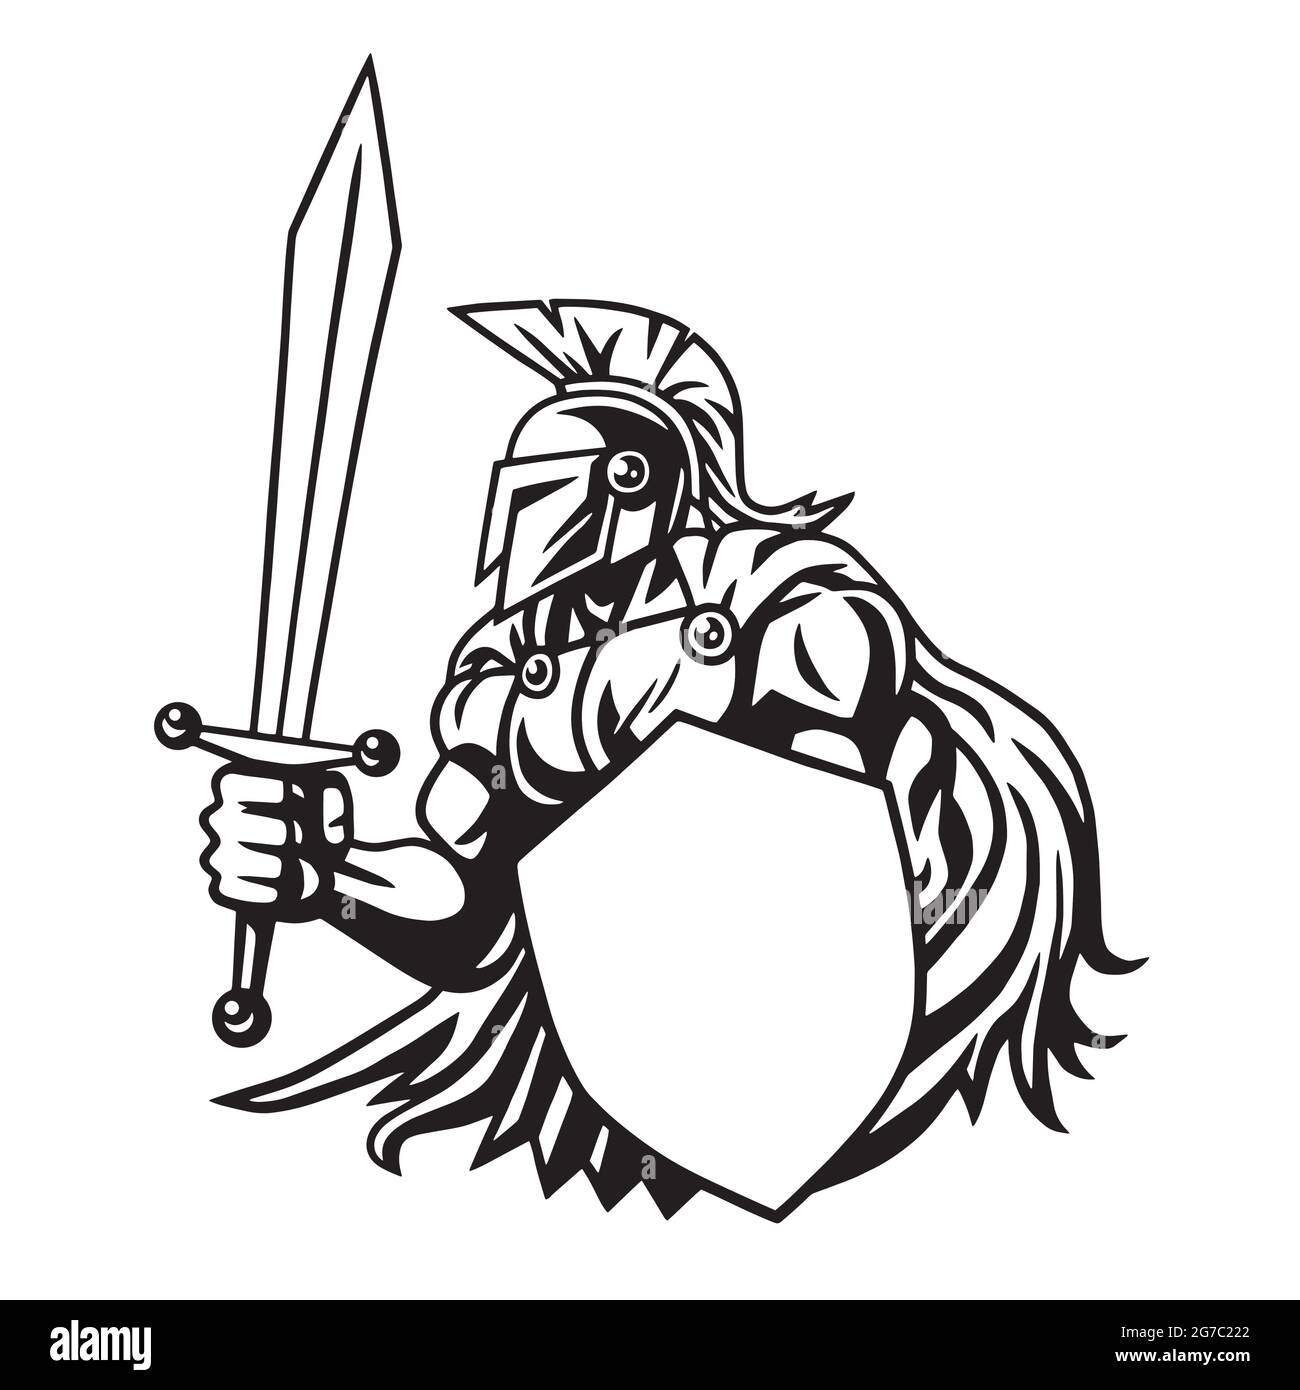 Vecteur de dessin Spartan Warrior Illustration de Vecteur